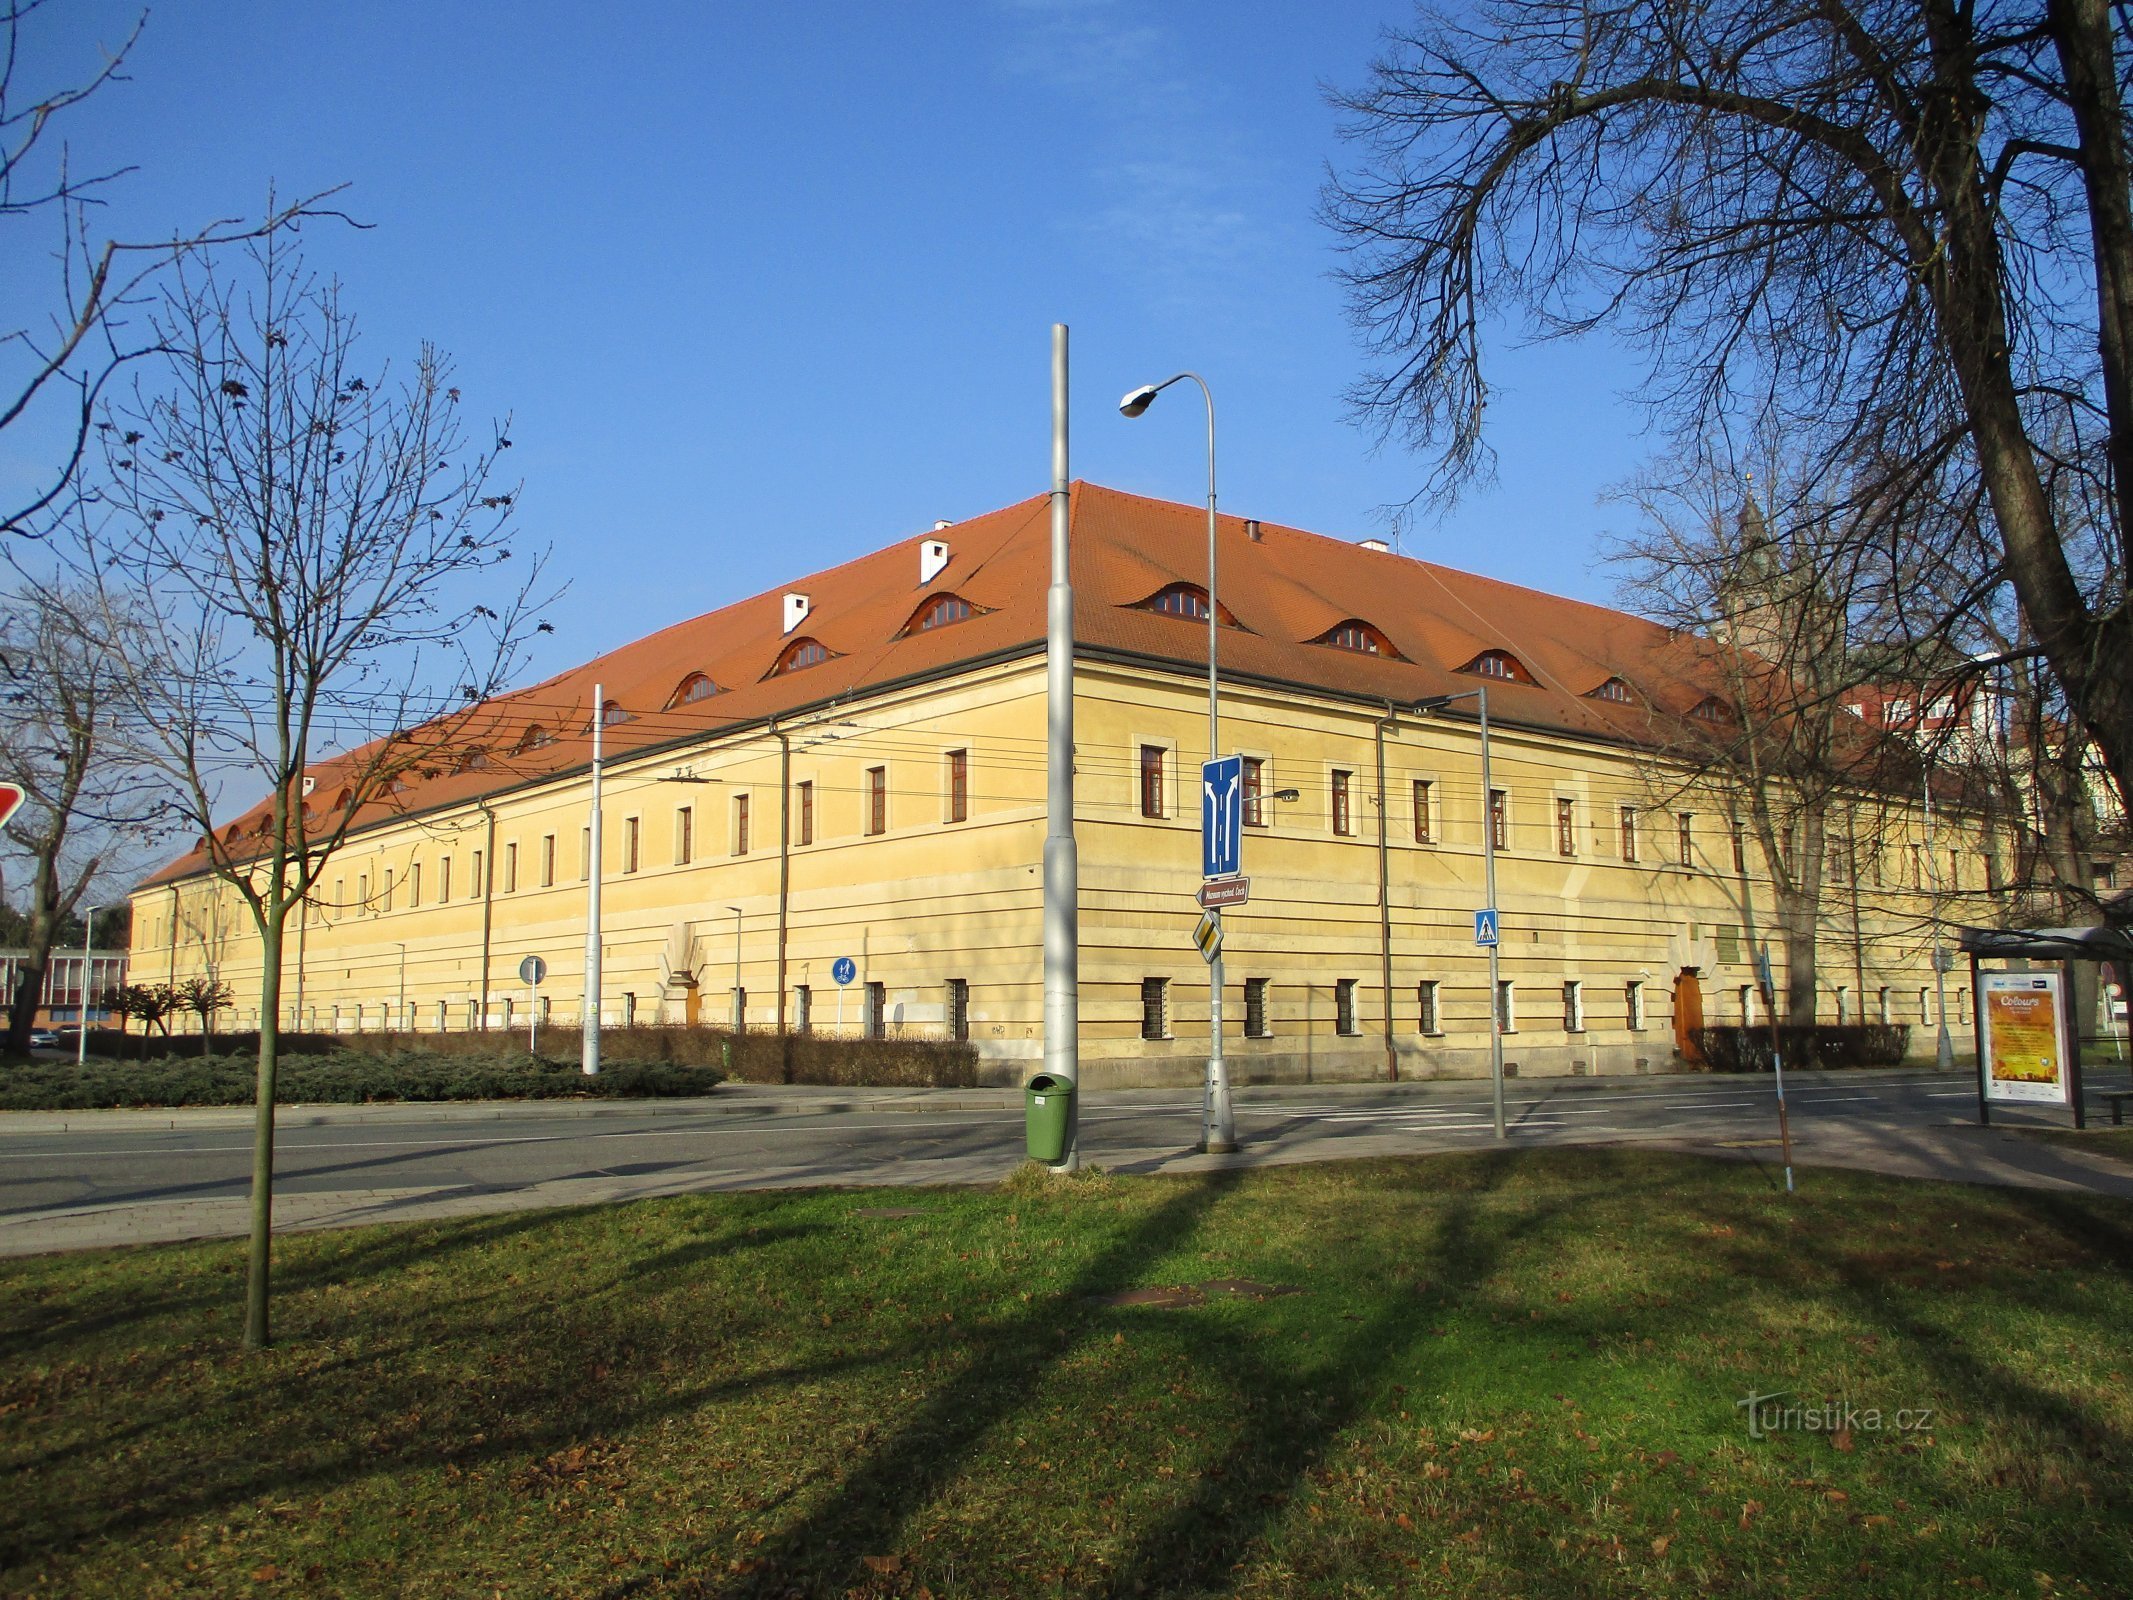 Ehemalige Kavalleriekaserne (Hradec Králové, 9.2.2020. Februar XNUMX)